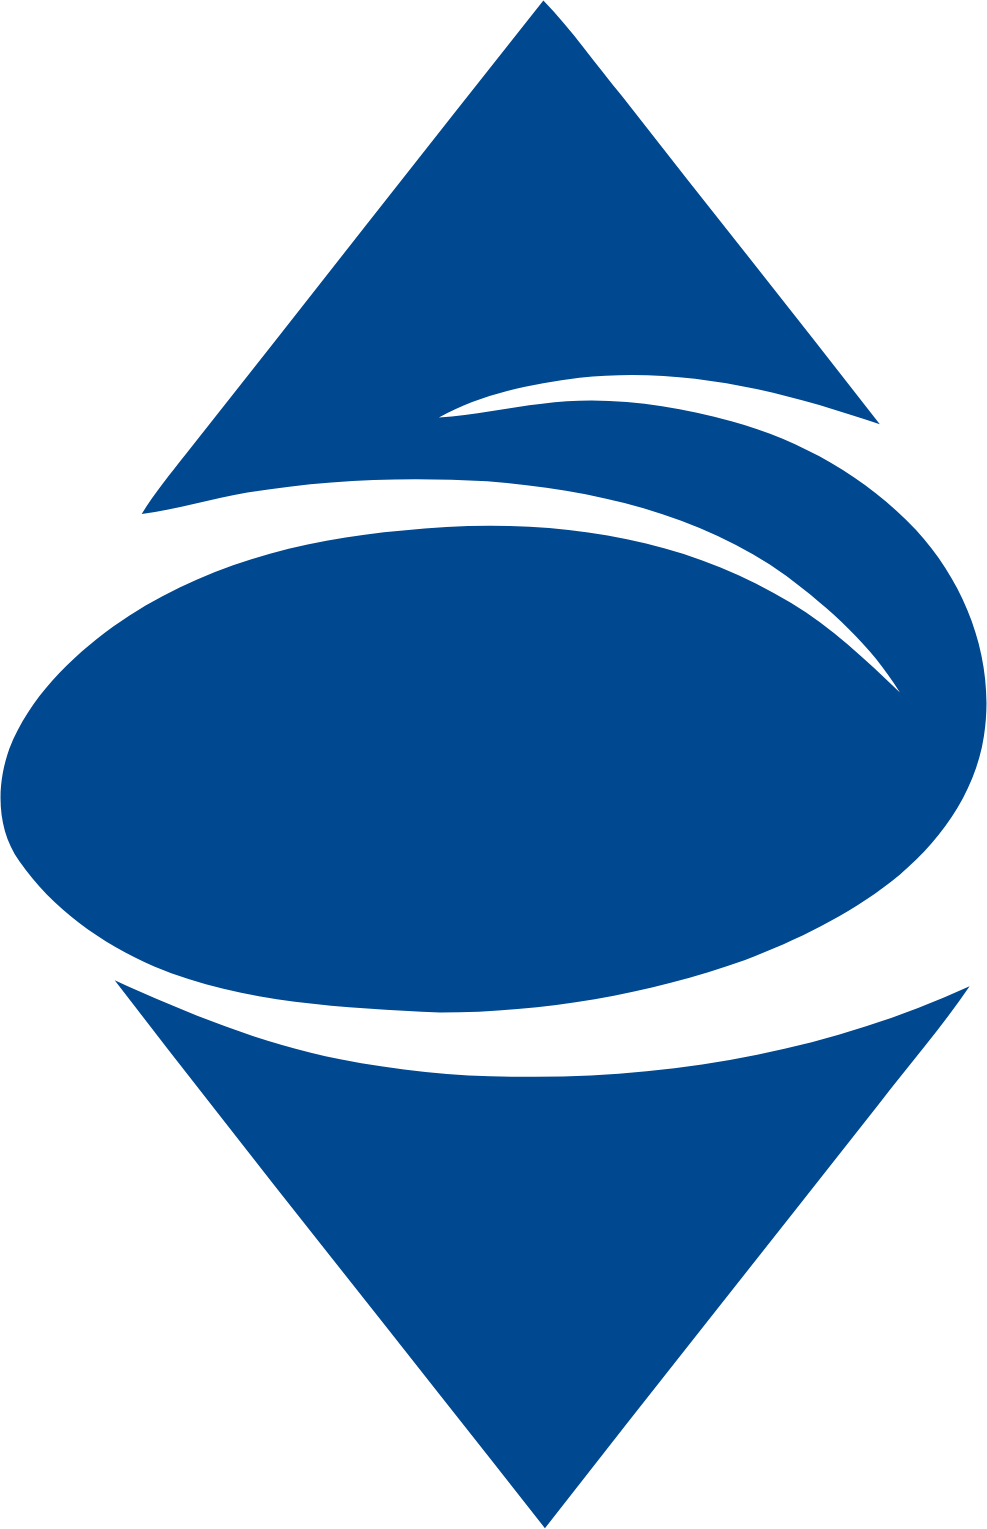 Otter Tail Corporation Logo